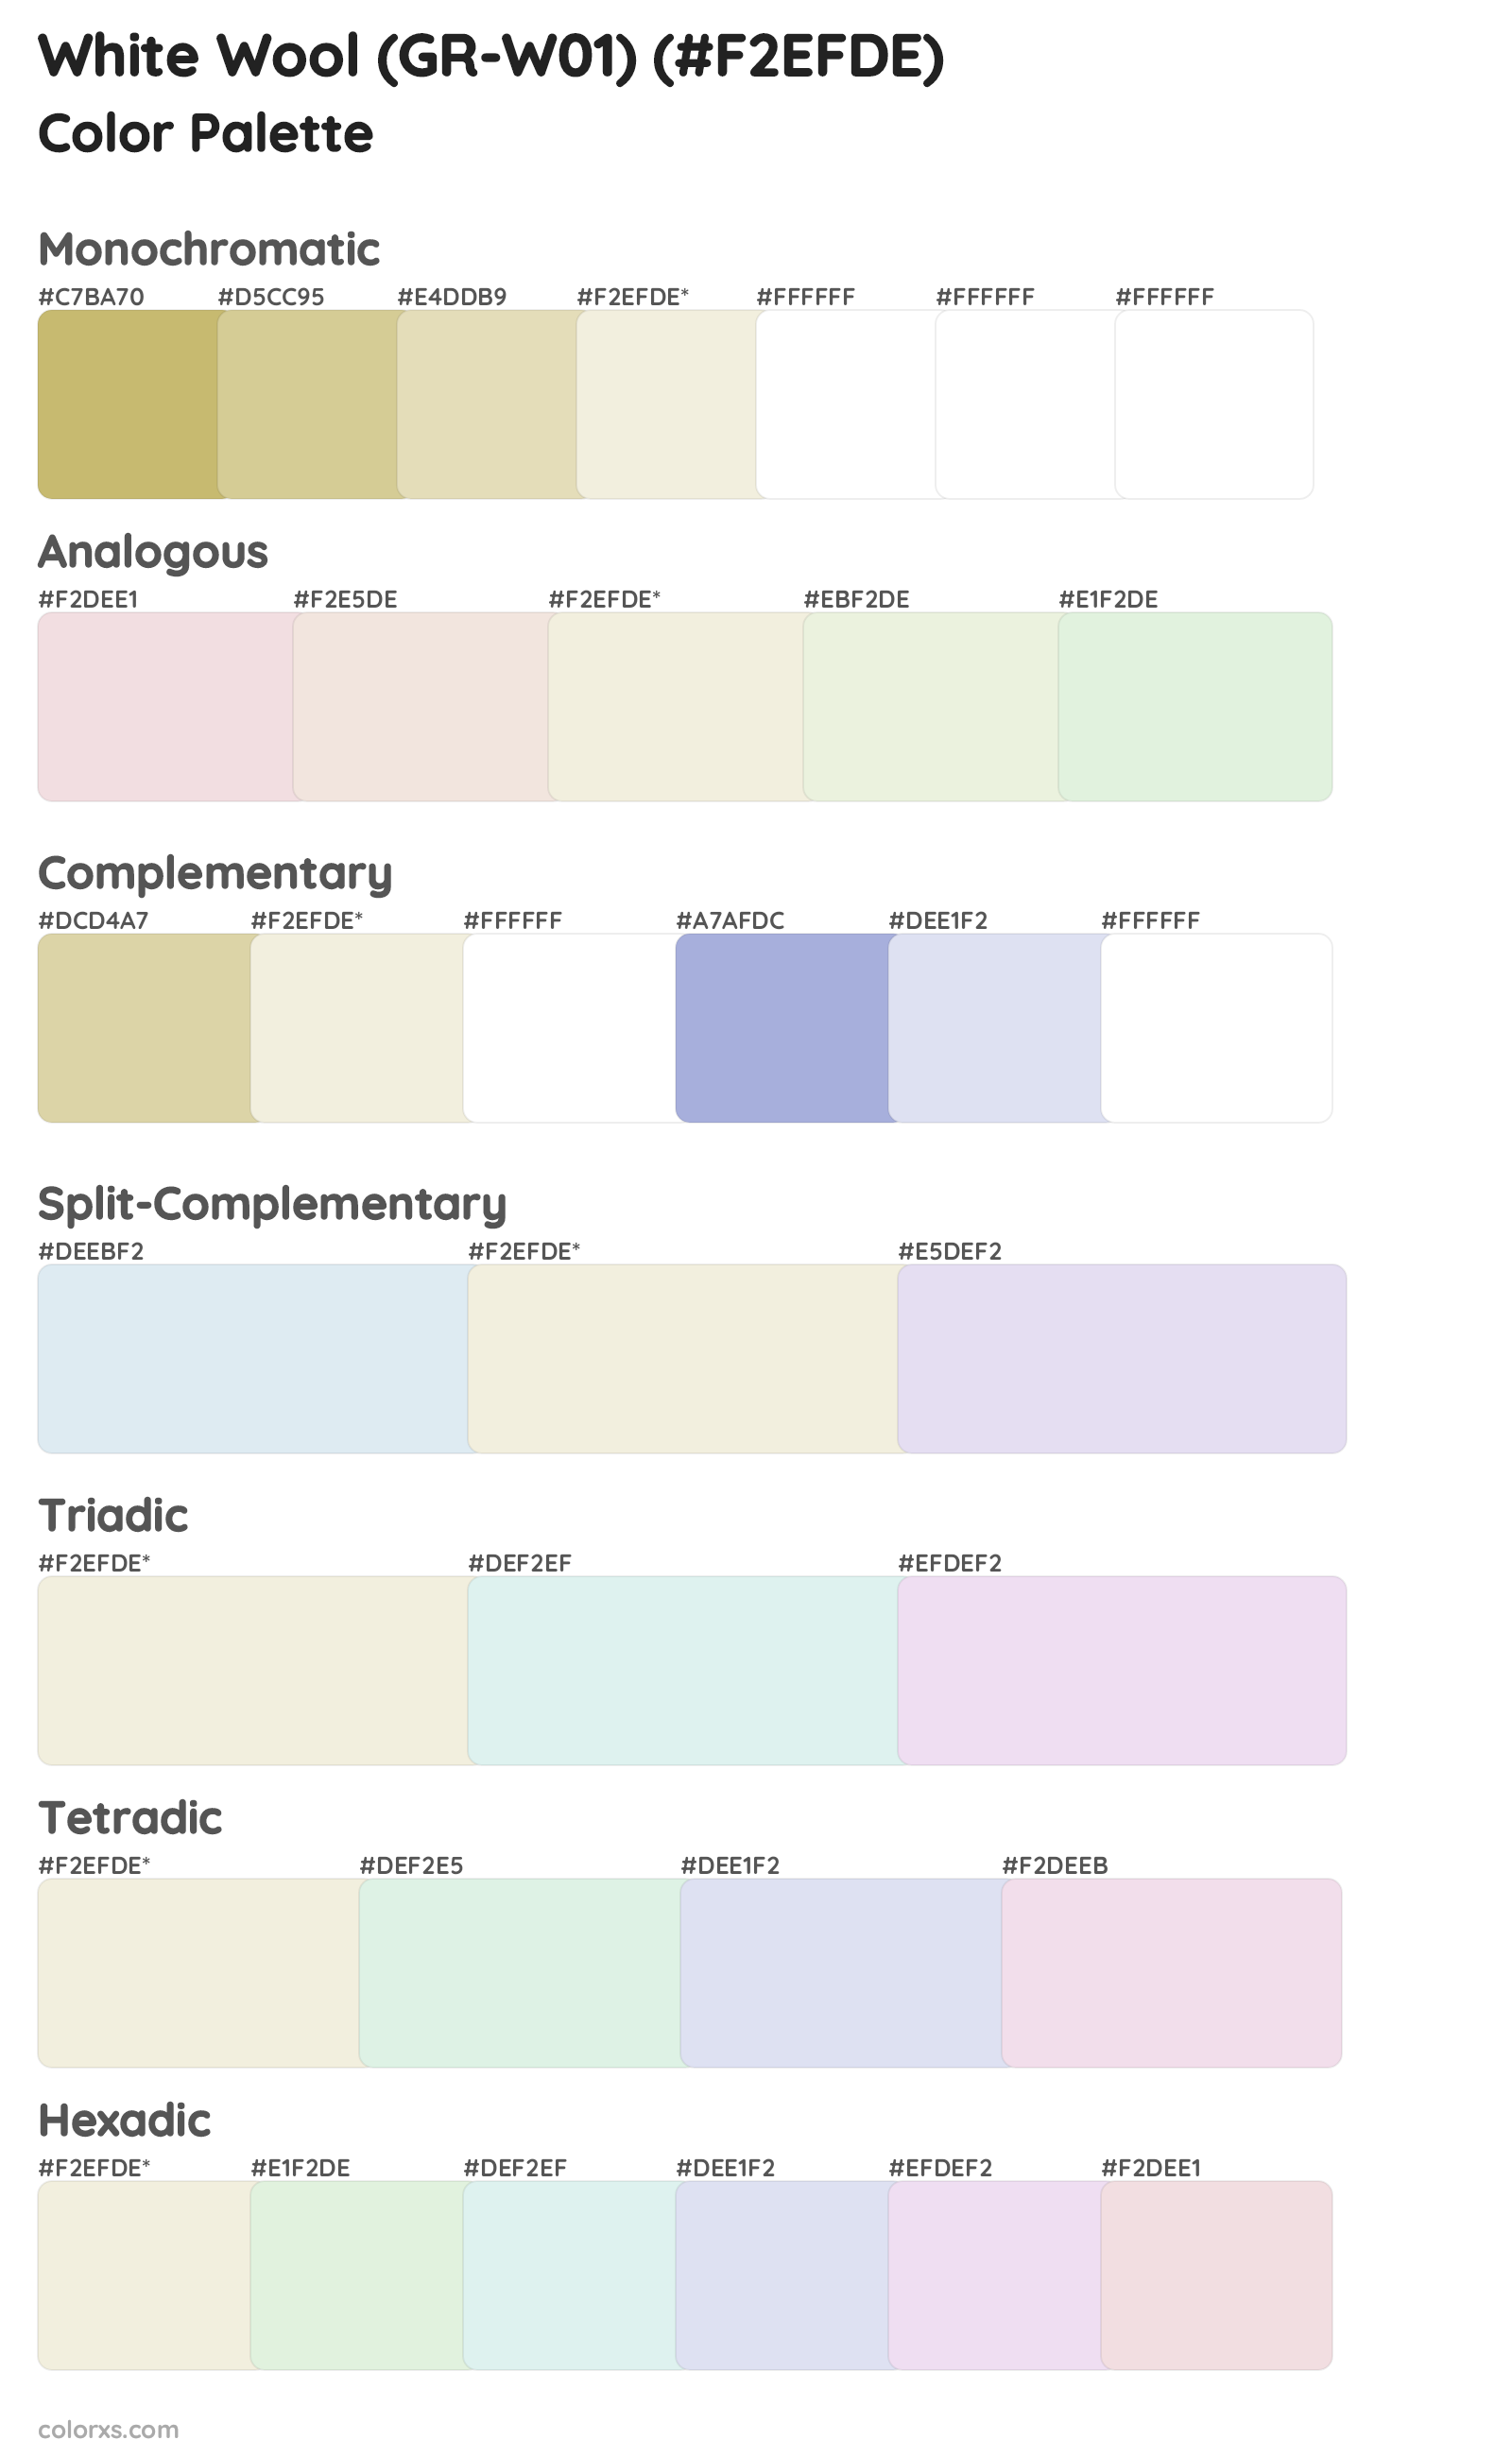 White Wool (GR-W01) Color Scheme Palettes